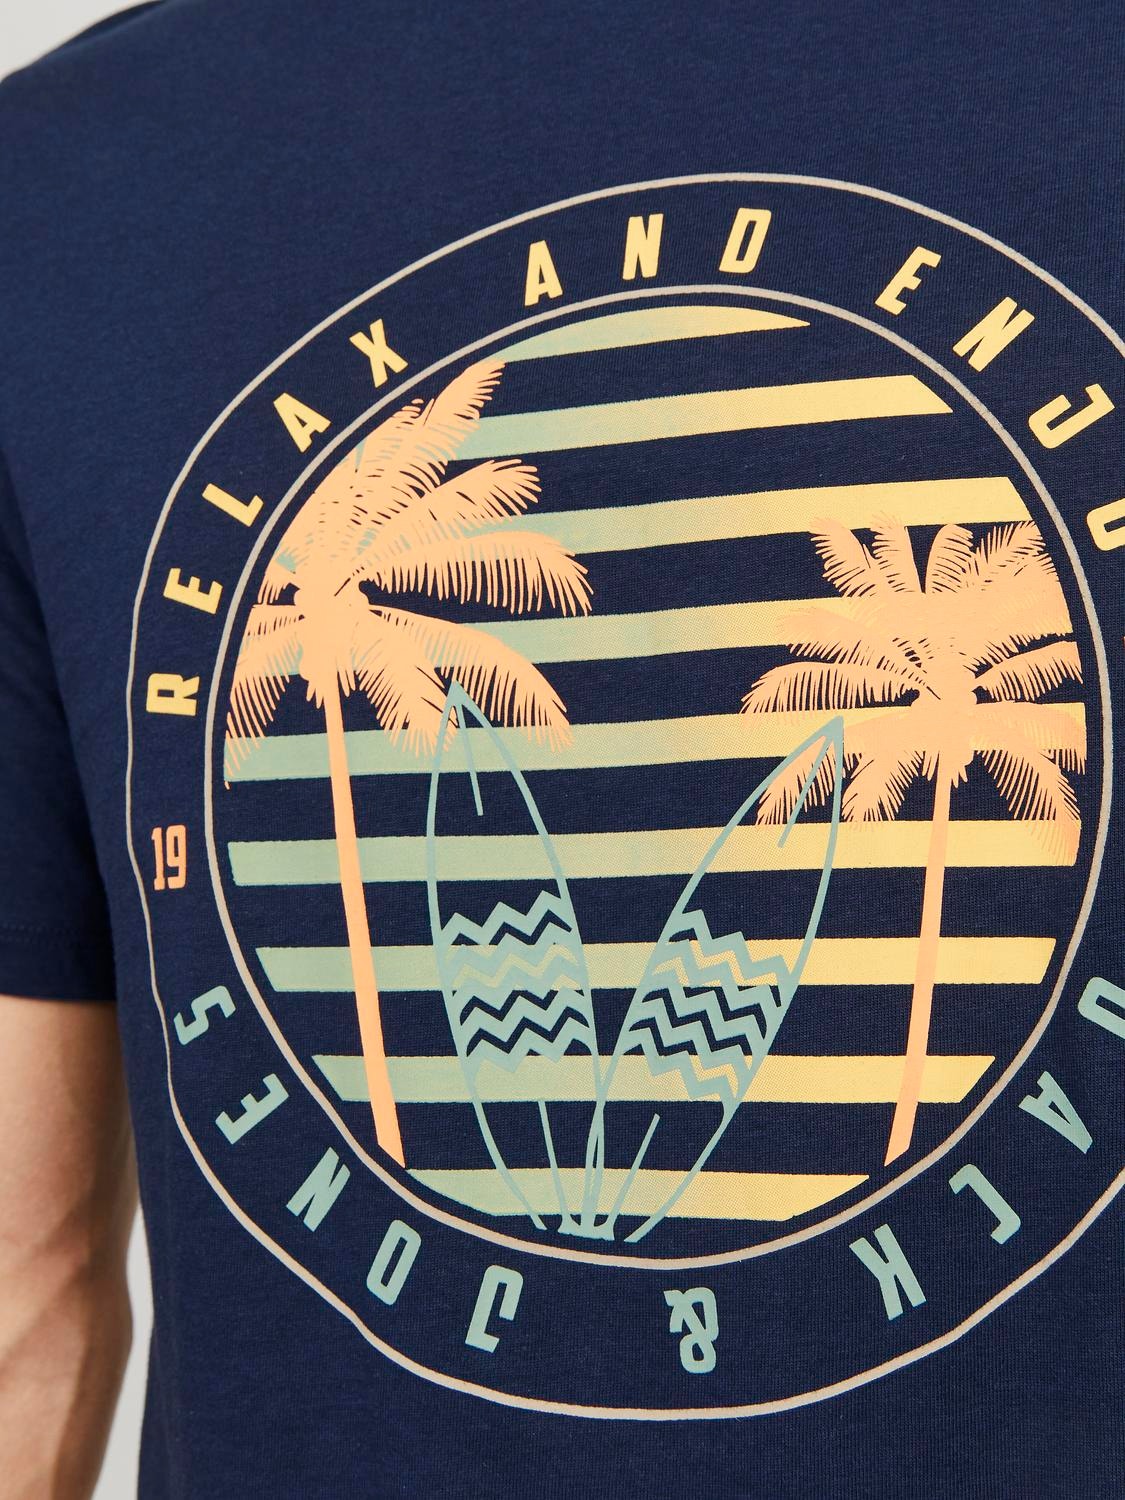 Jack & Jones T-shirt Estampar Decote Redondo -Navy Blazer - 12249266